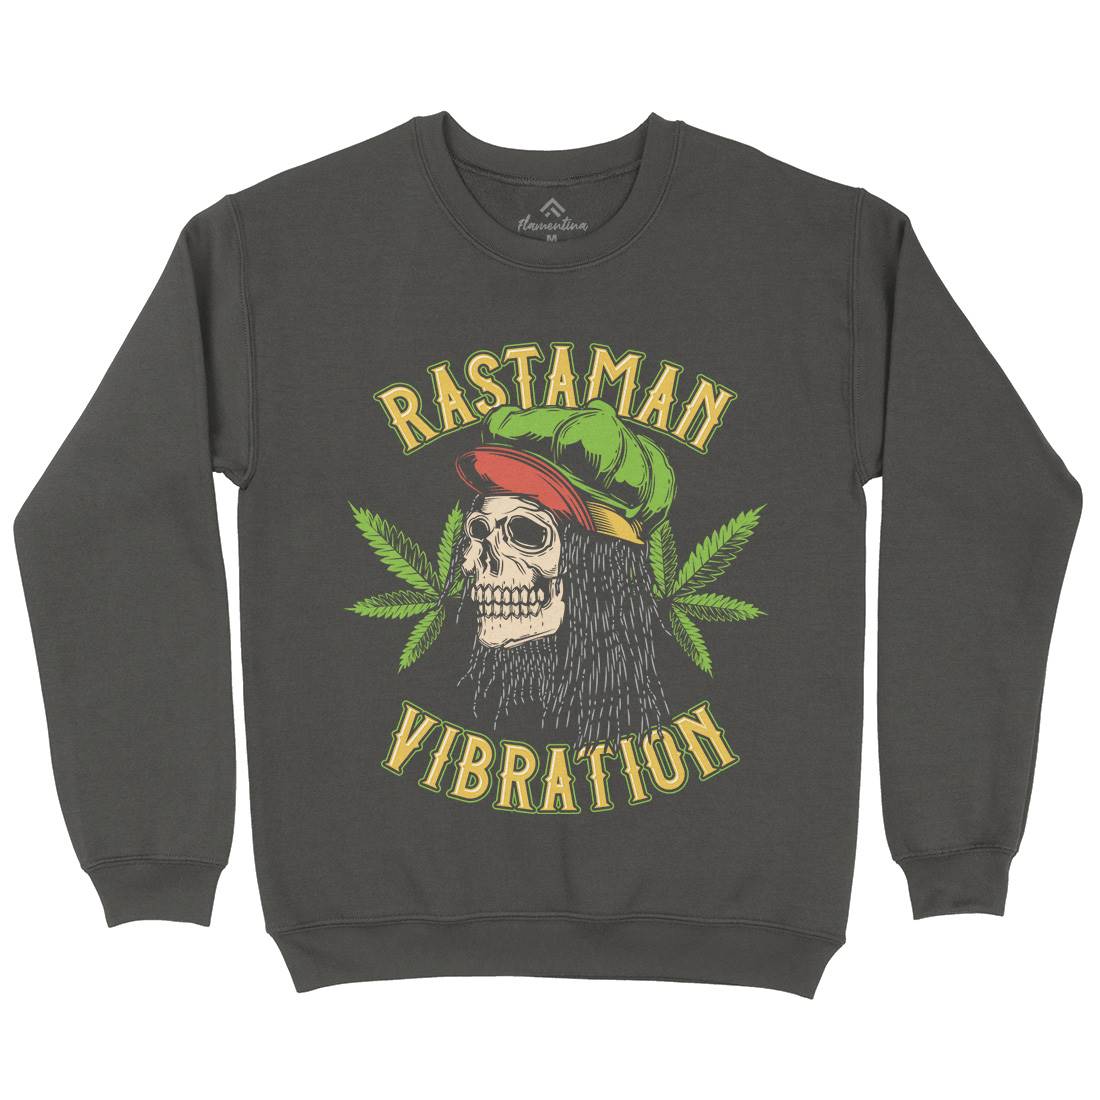 Rastaman Vibration Kids Crew Neck Sweatshirt Drugs B805